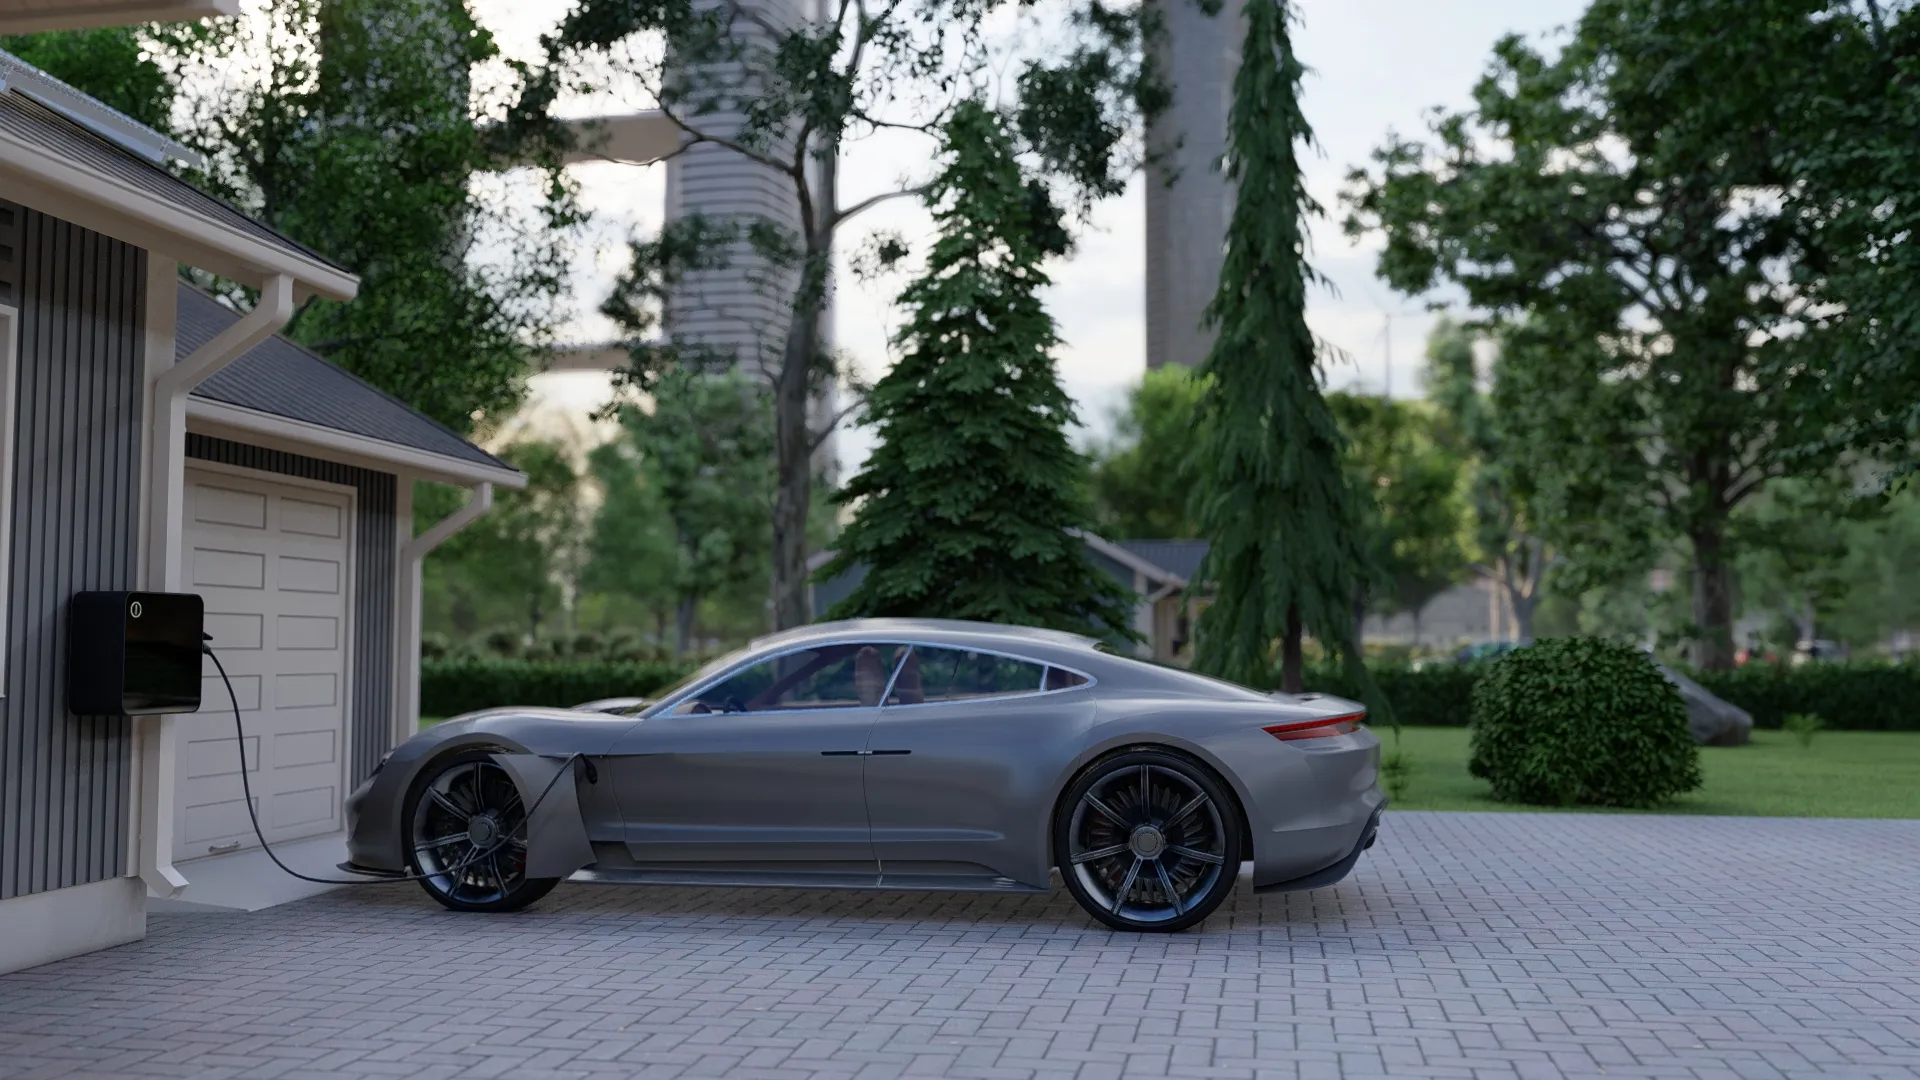 3D render of EV car charging at home.